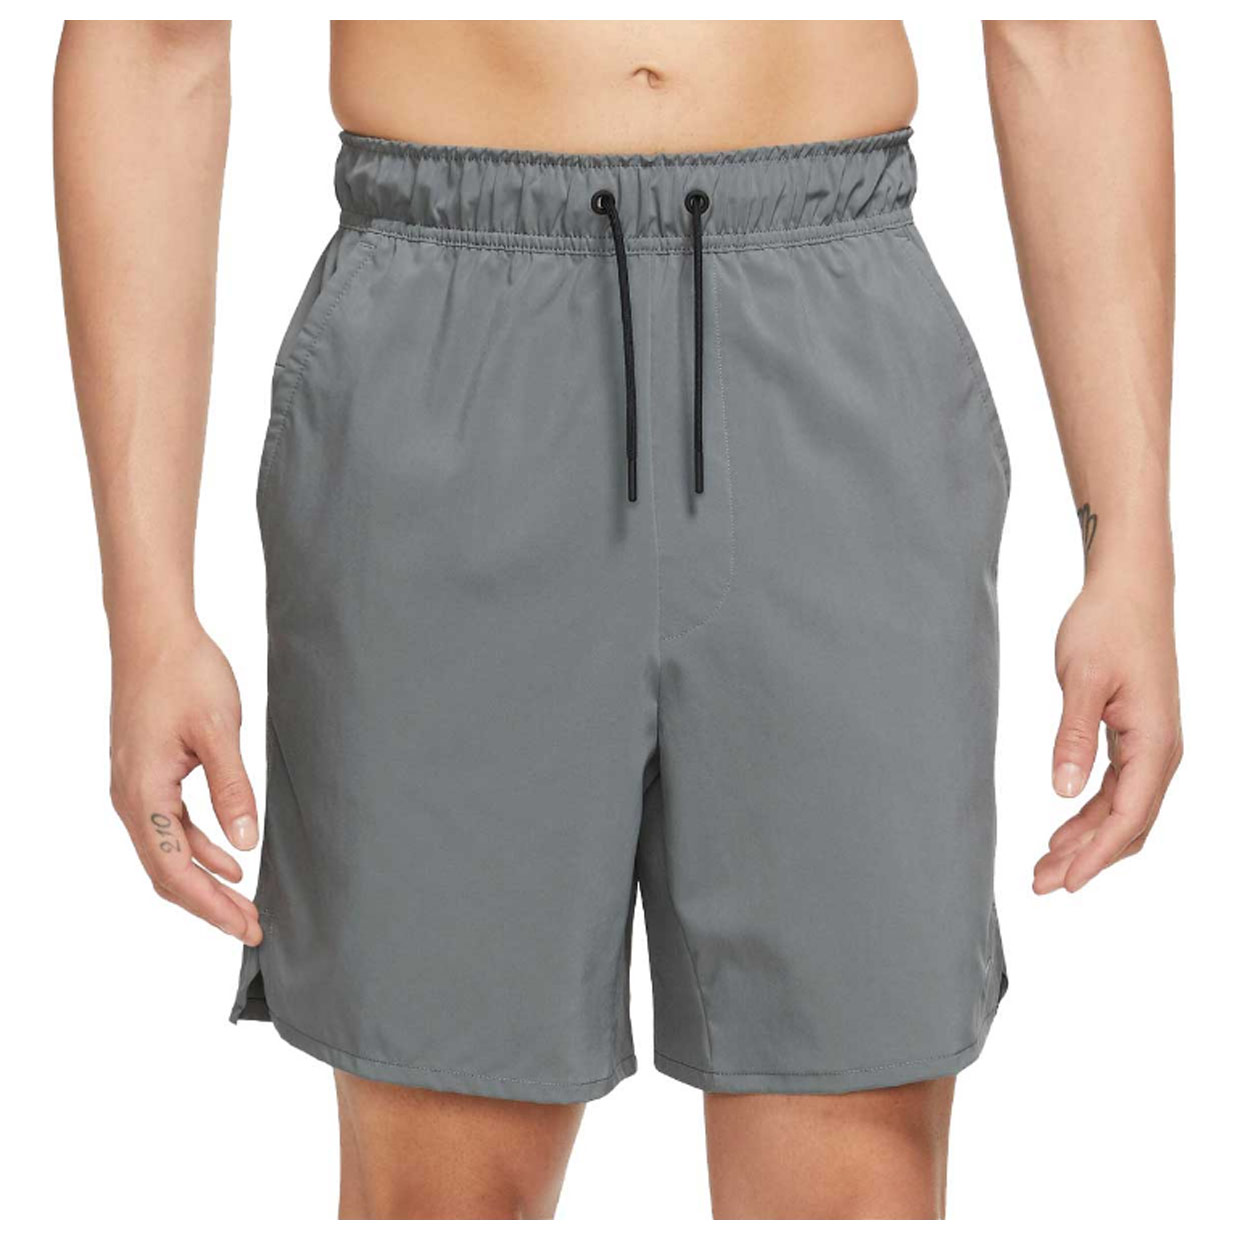 Herren Sporthose Fitness Shorts